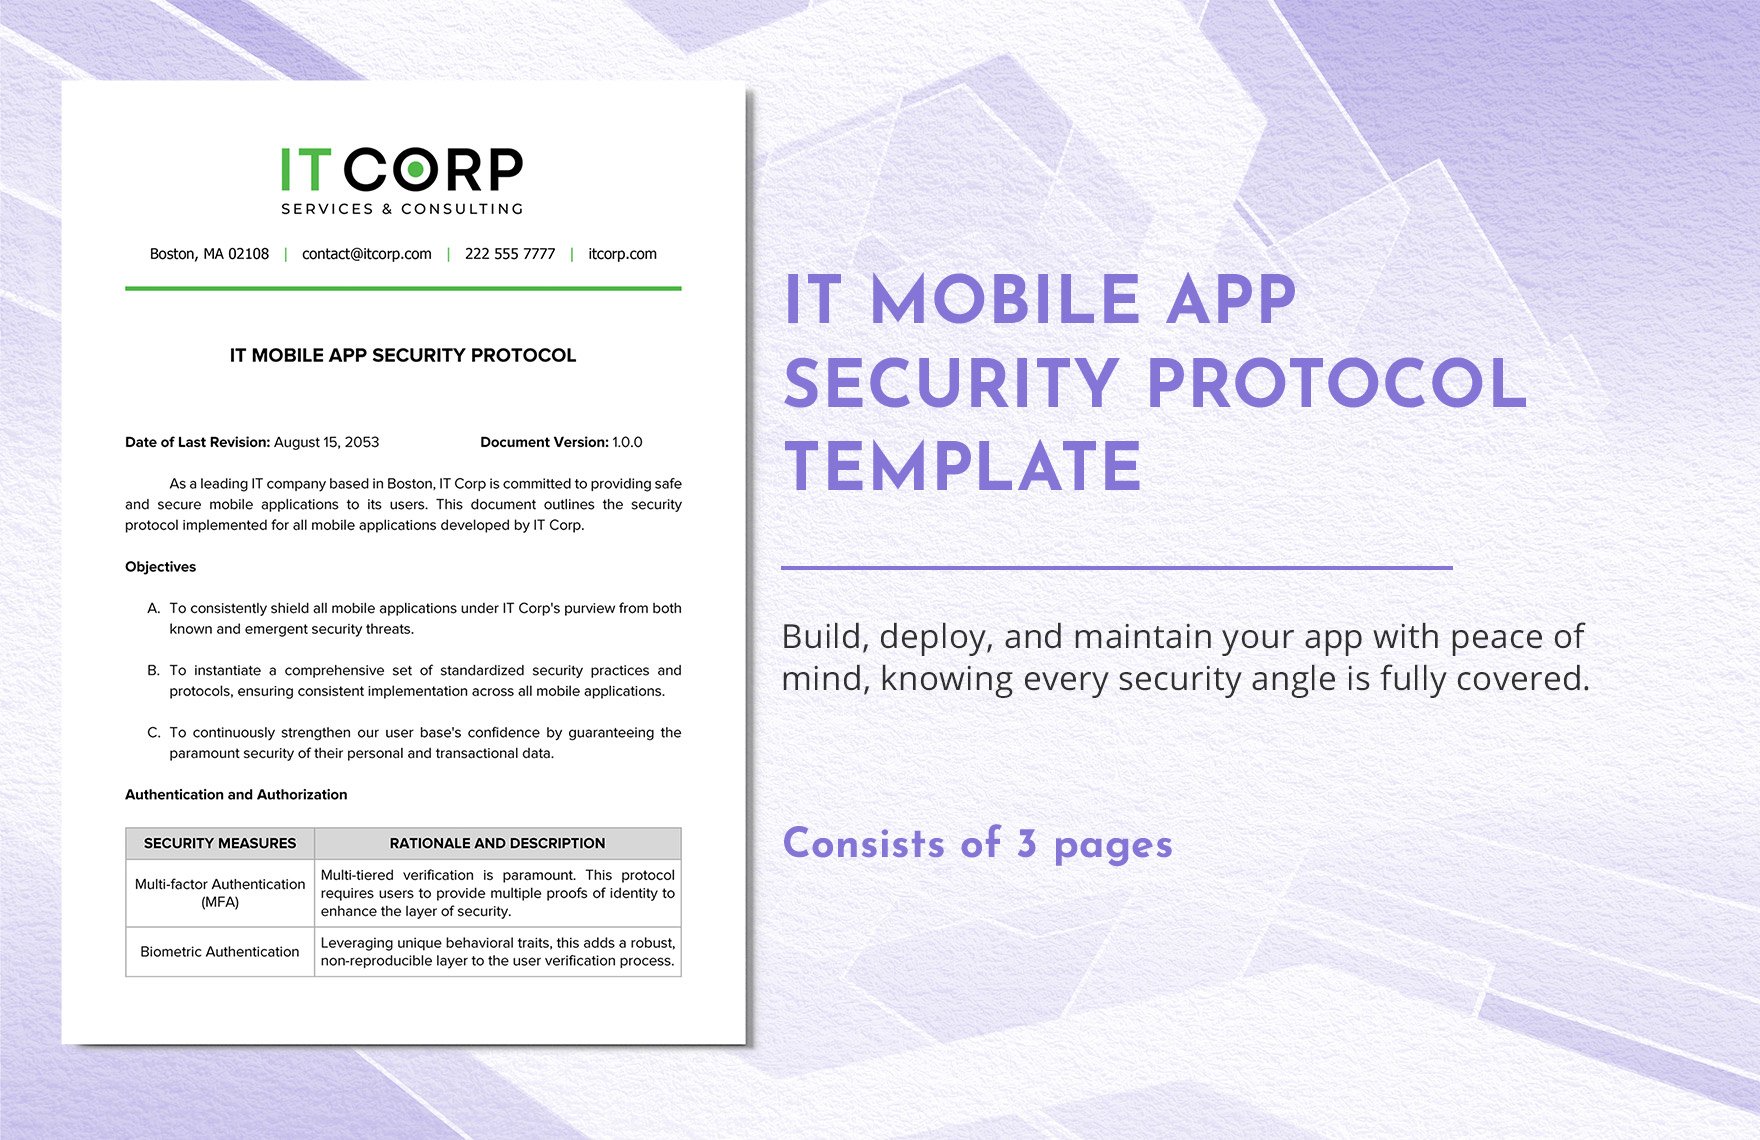 IT Mobile App Security Protocol Template